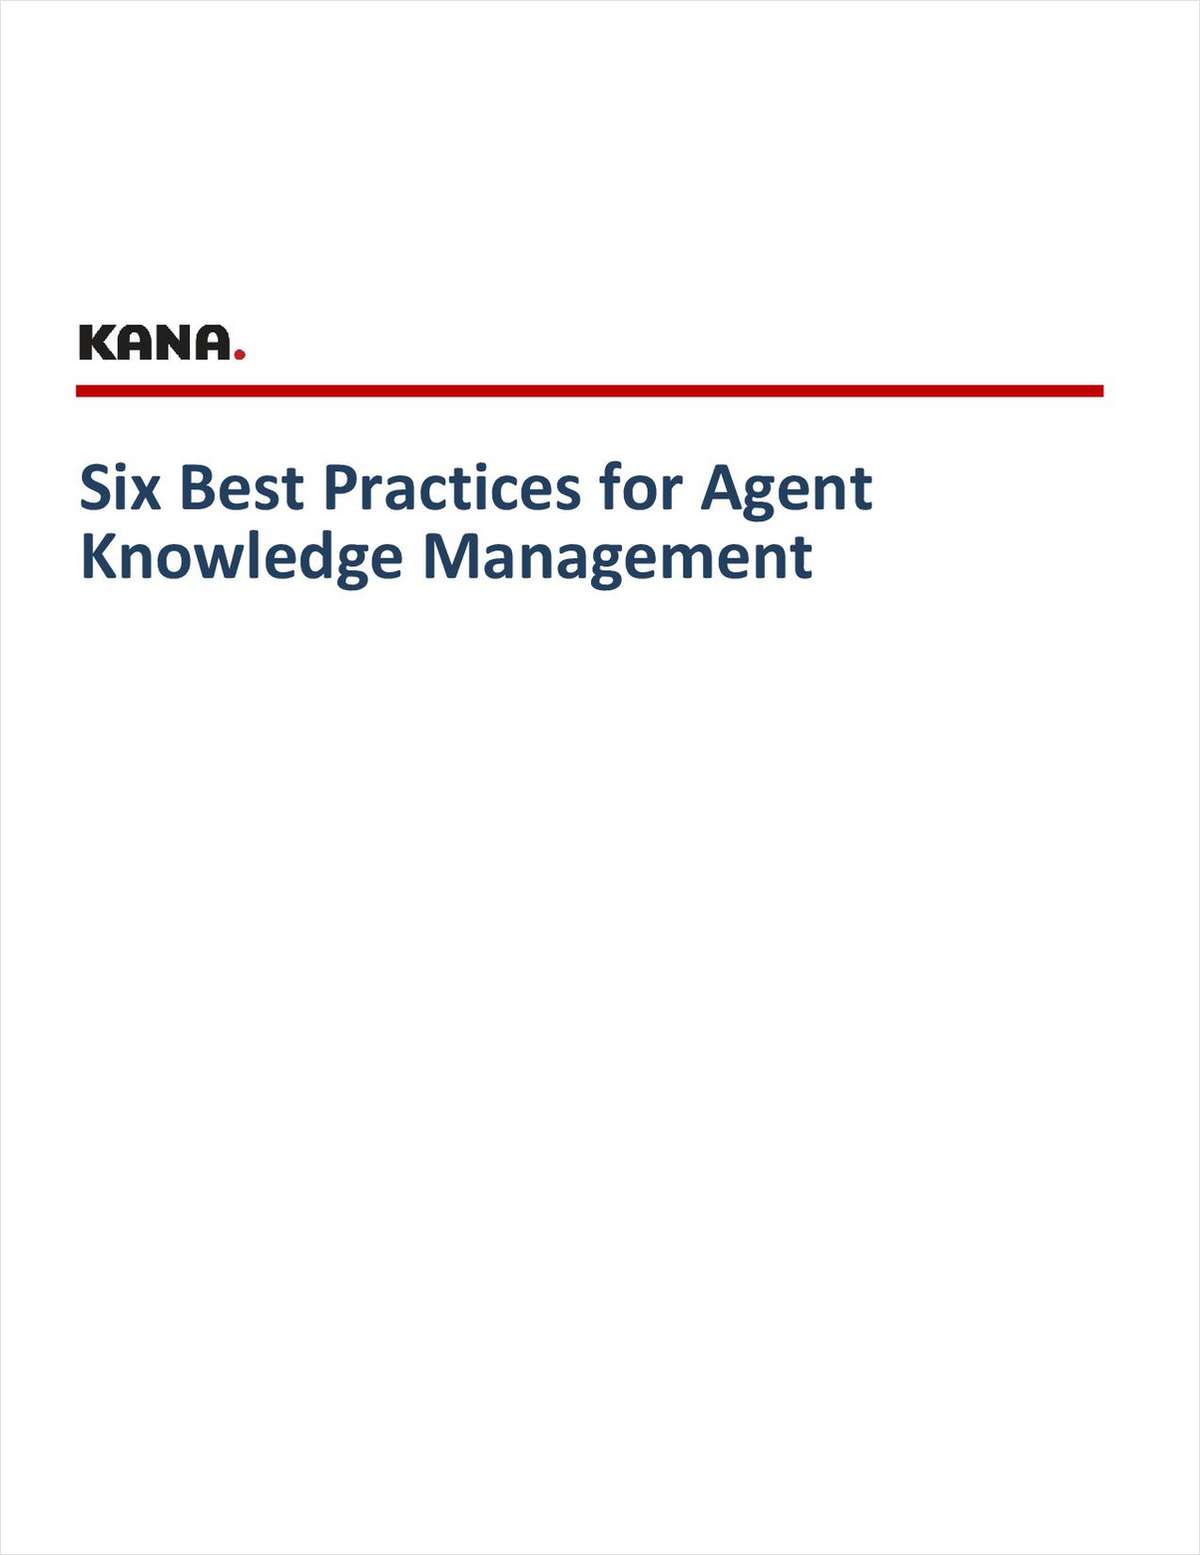 Customer Service Knowledge Management: Strategic & Implementation Tips